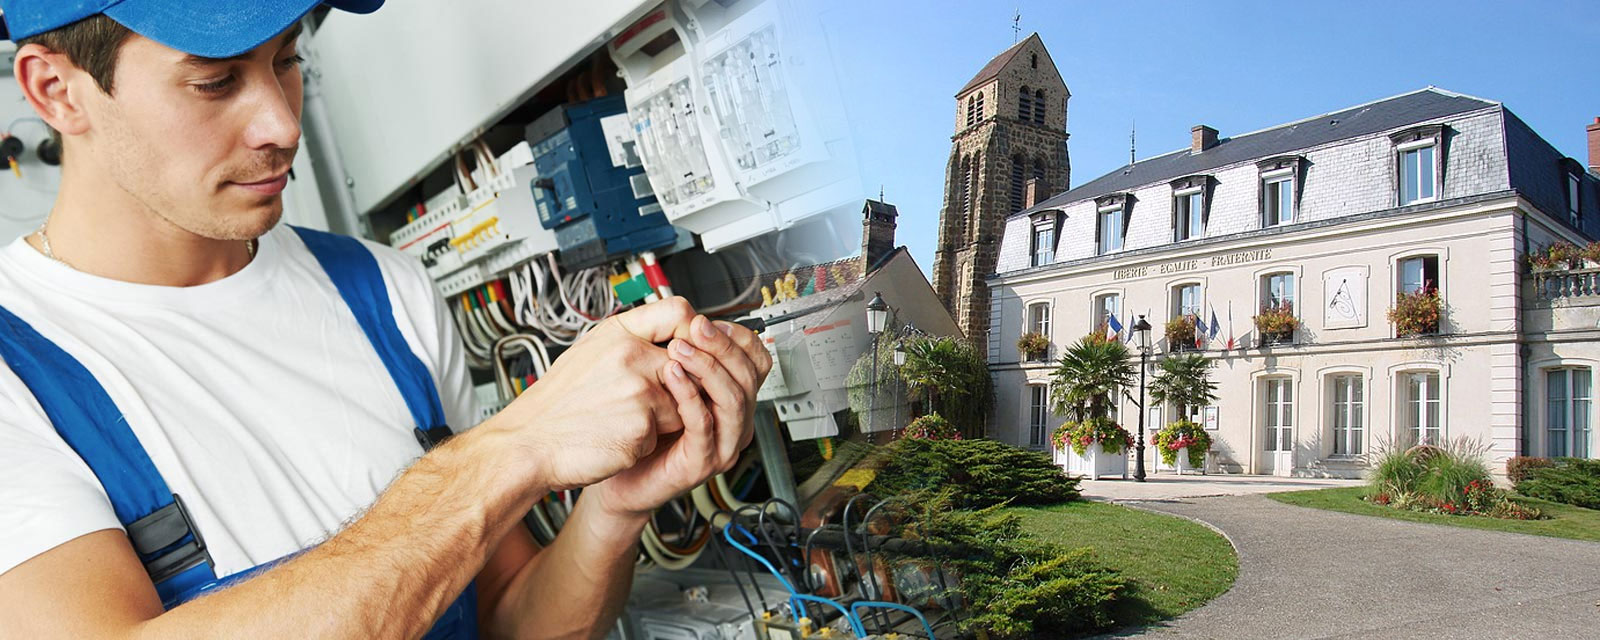 Électricien Saint-Germain-lès-Arpajon (91180)